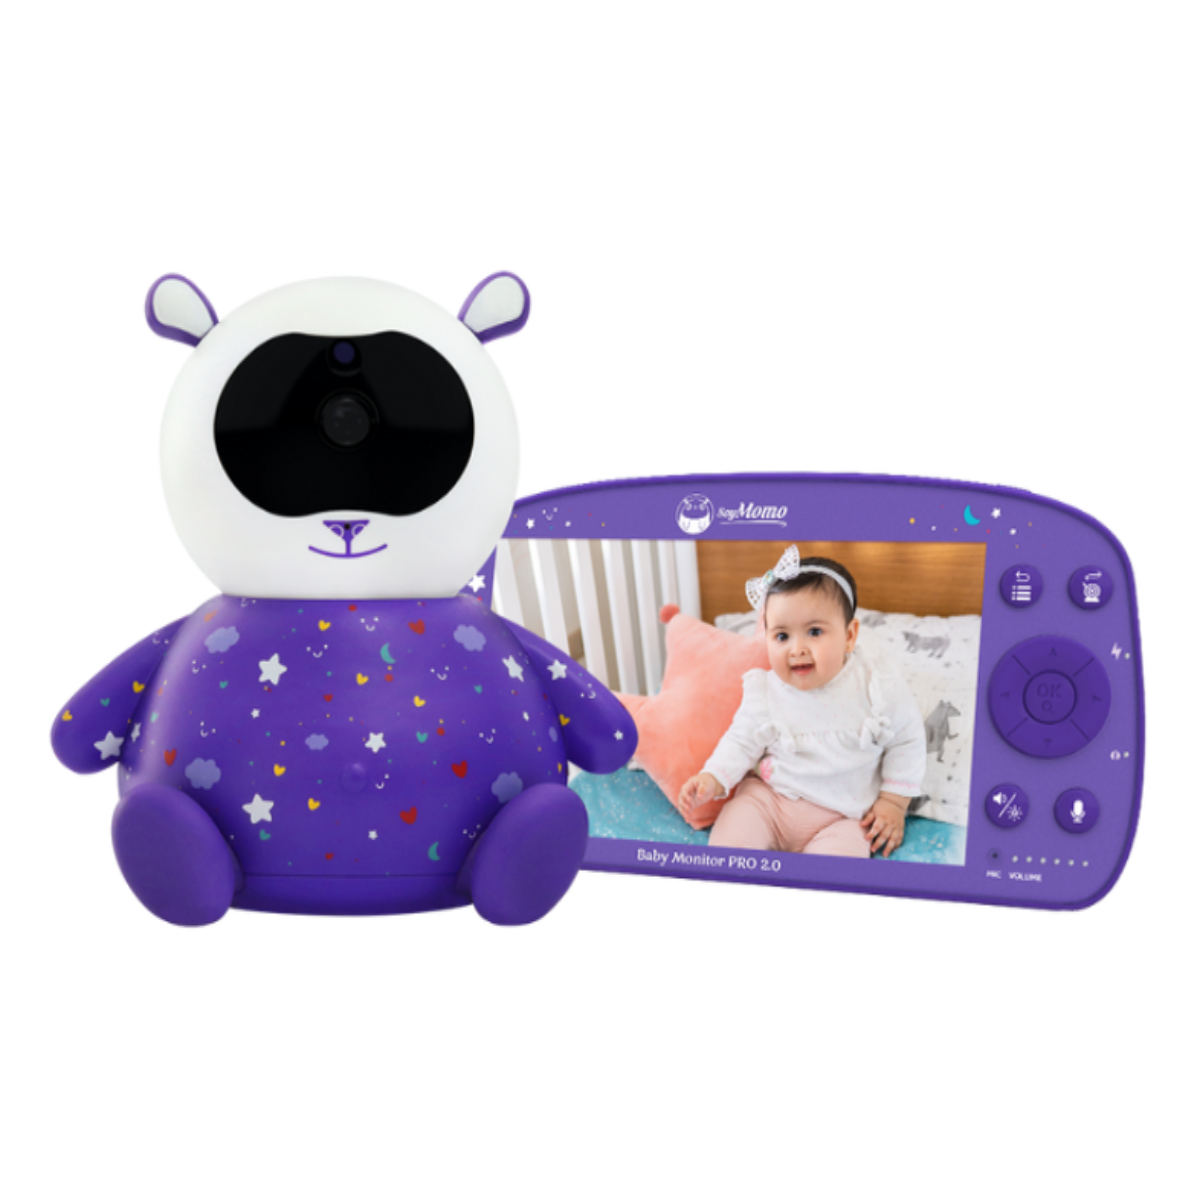 SOYMOMO Baby Monitor Pro Babyphone 2.0